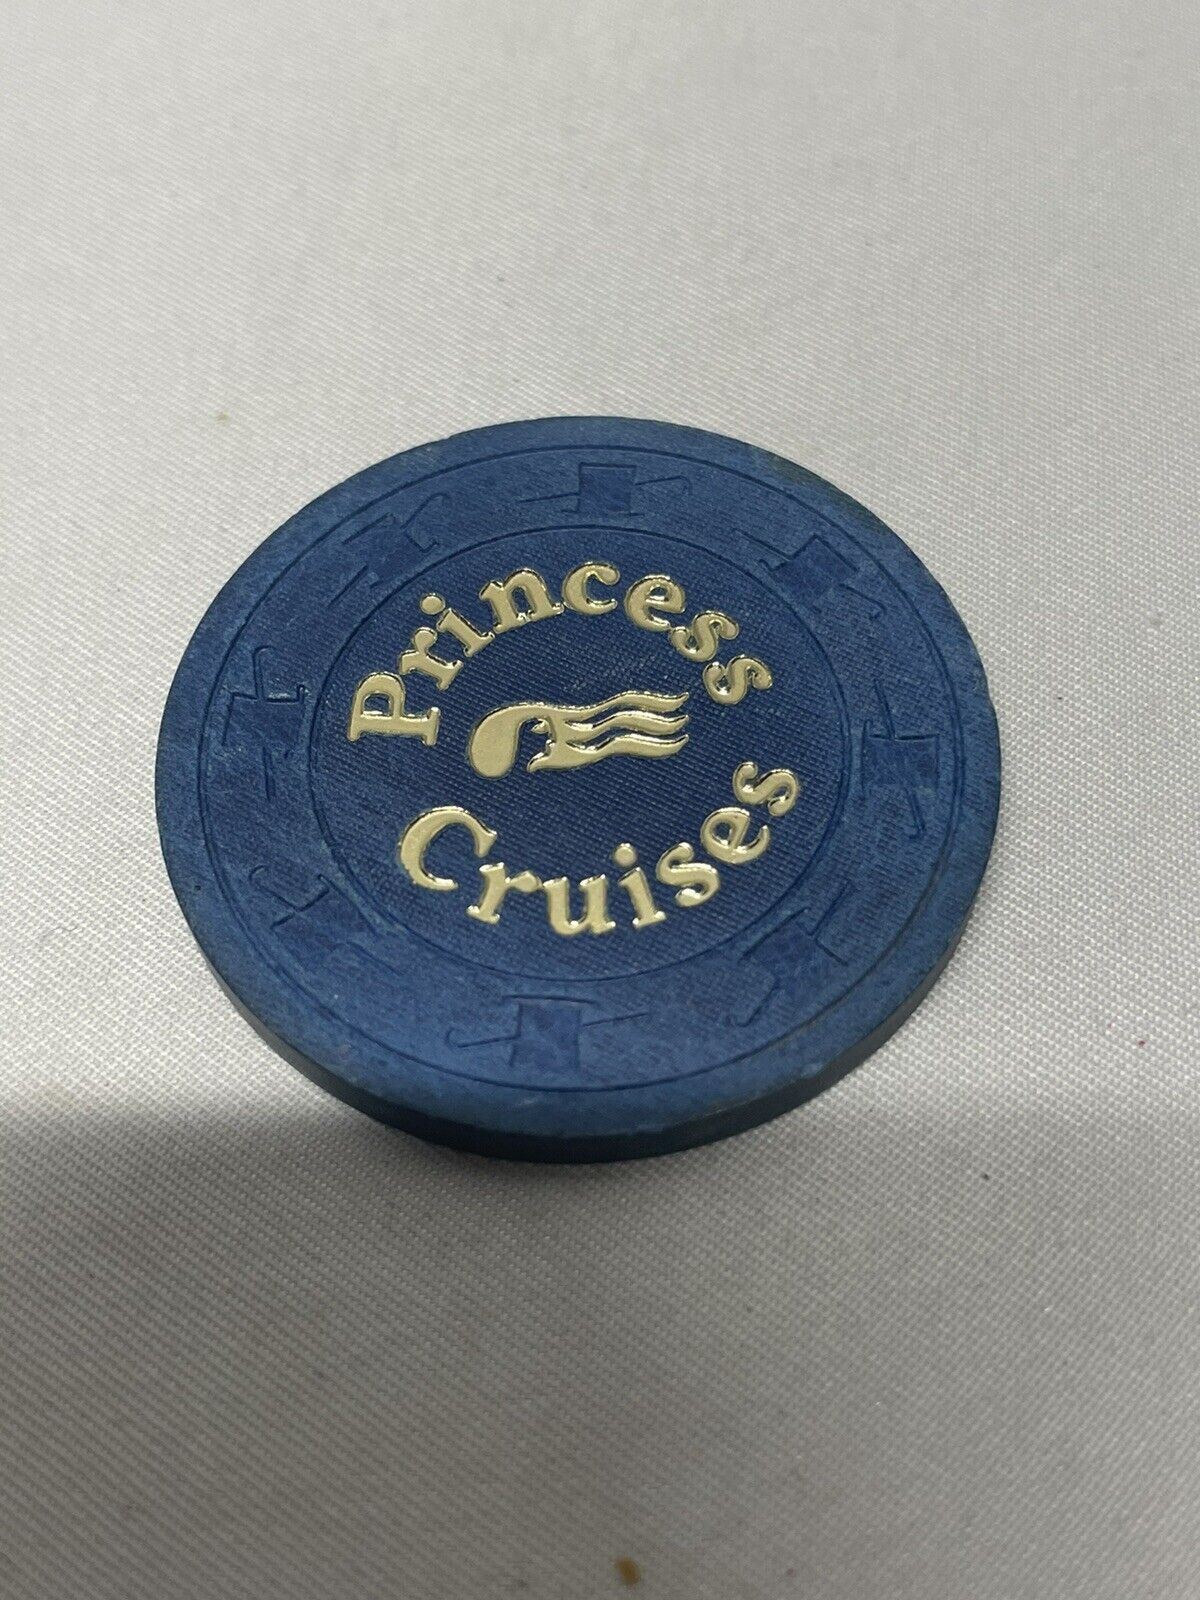 Vintage Casino Chip $0.50 Blue Princess Cruises Gambling Poker Chip 50 Cent